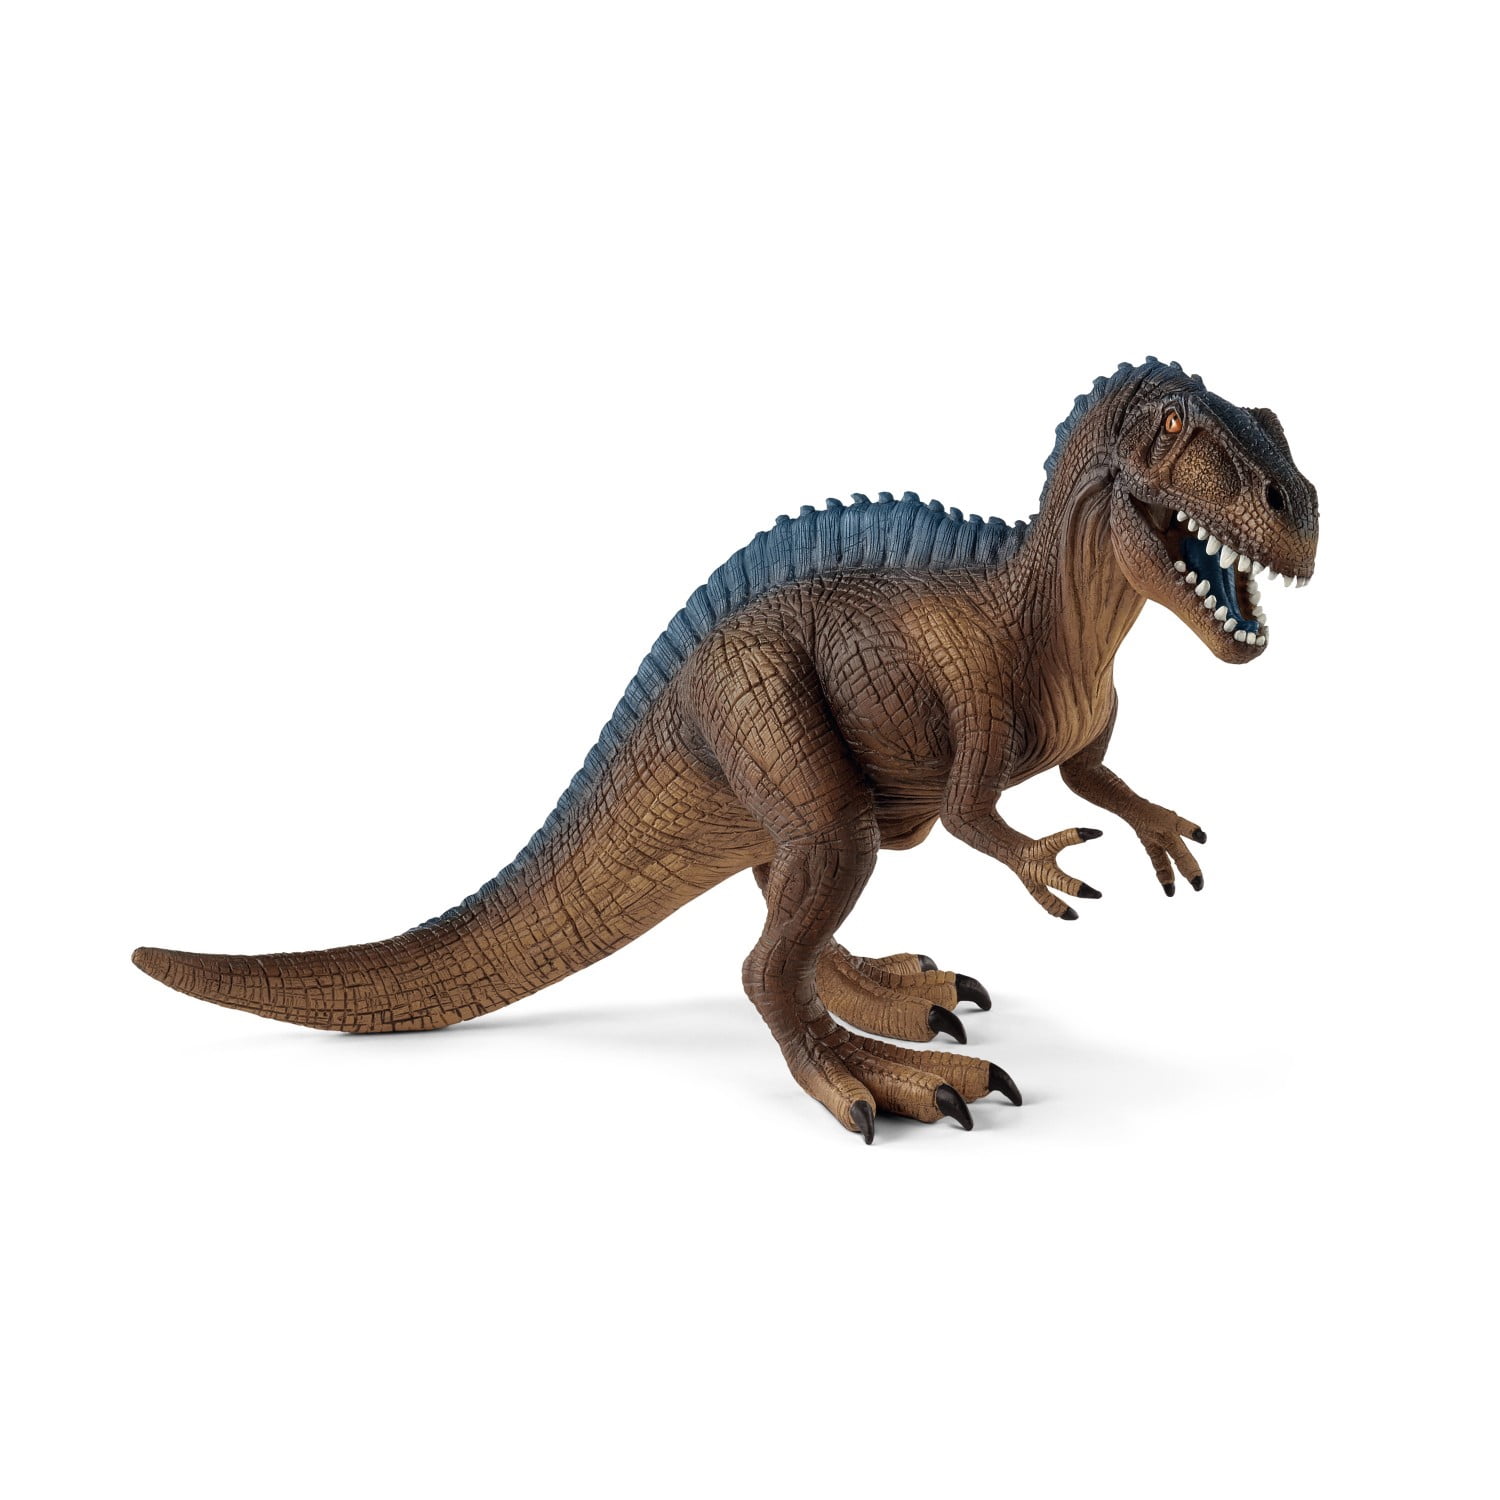 2 x 12" Large Acrocanthosaurus Dinosaurs Toys Figures Model Kids Christmas Gift 